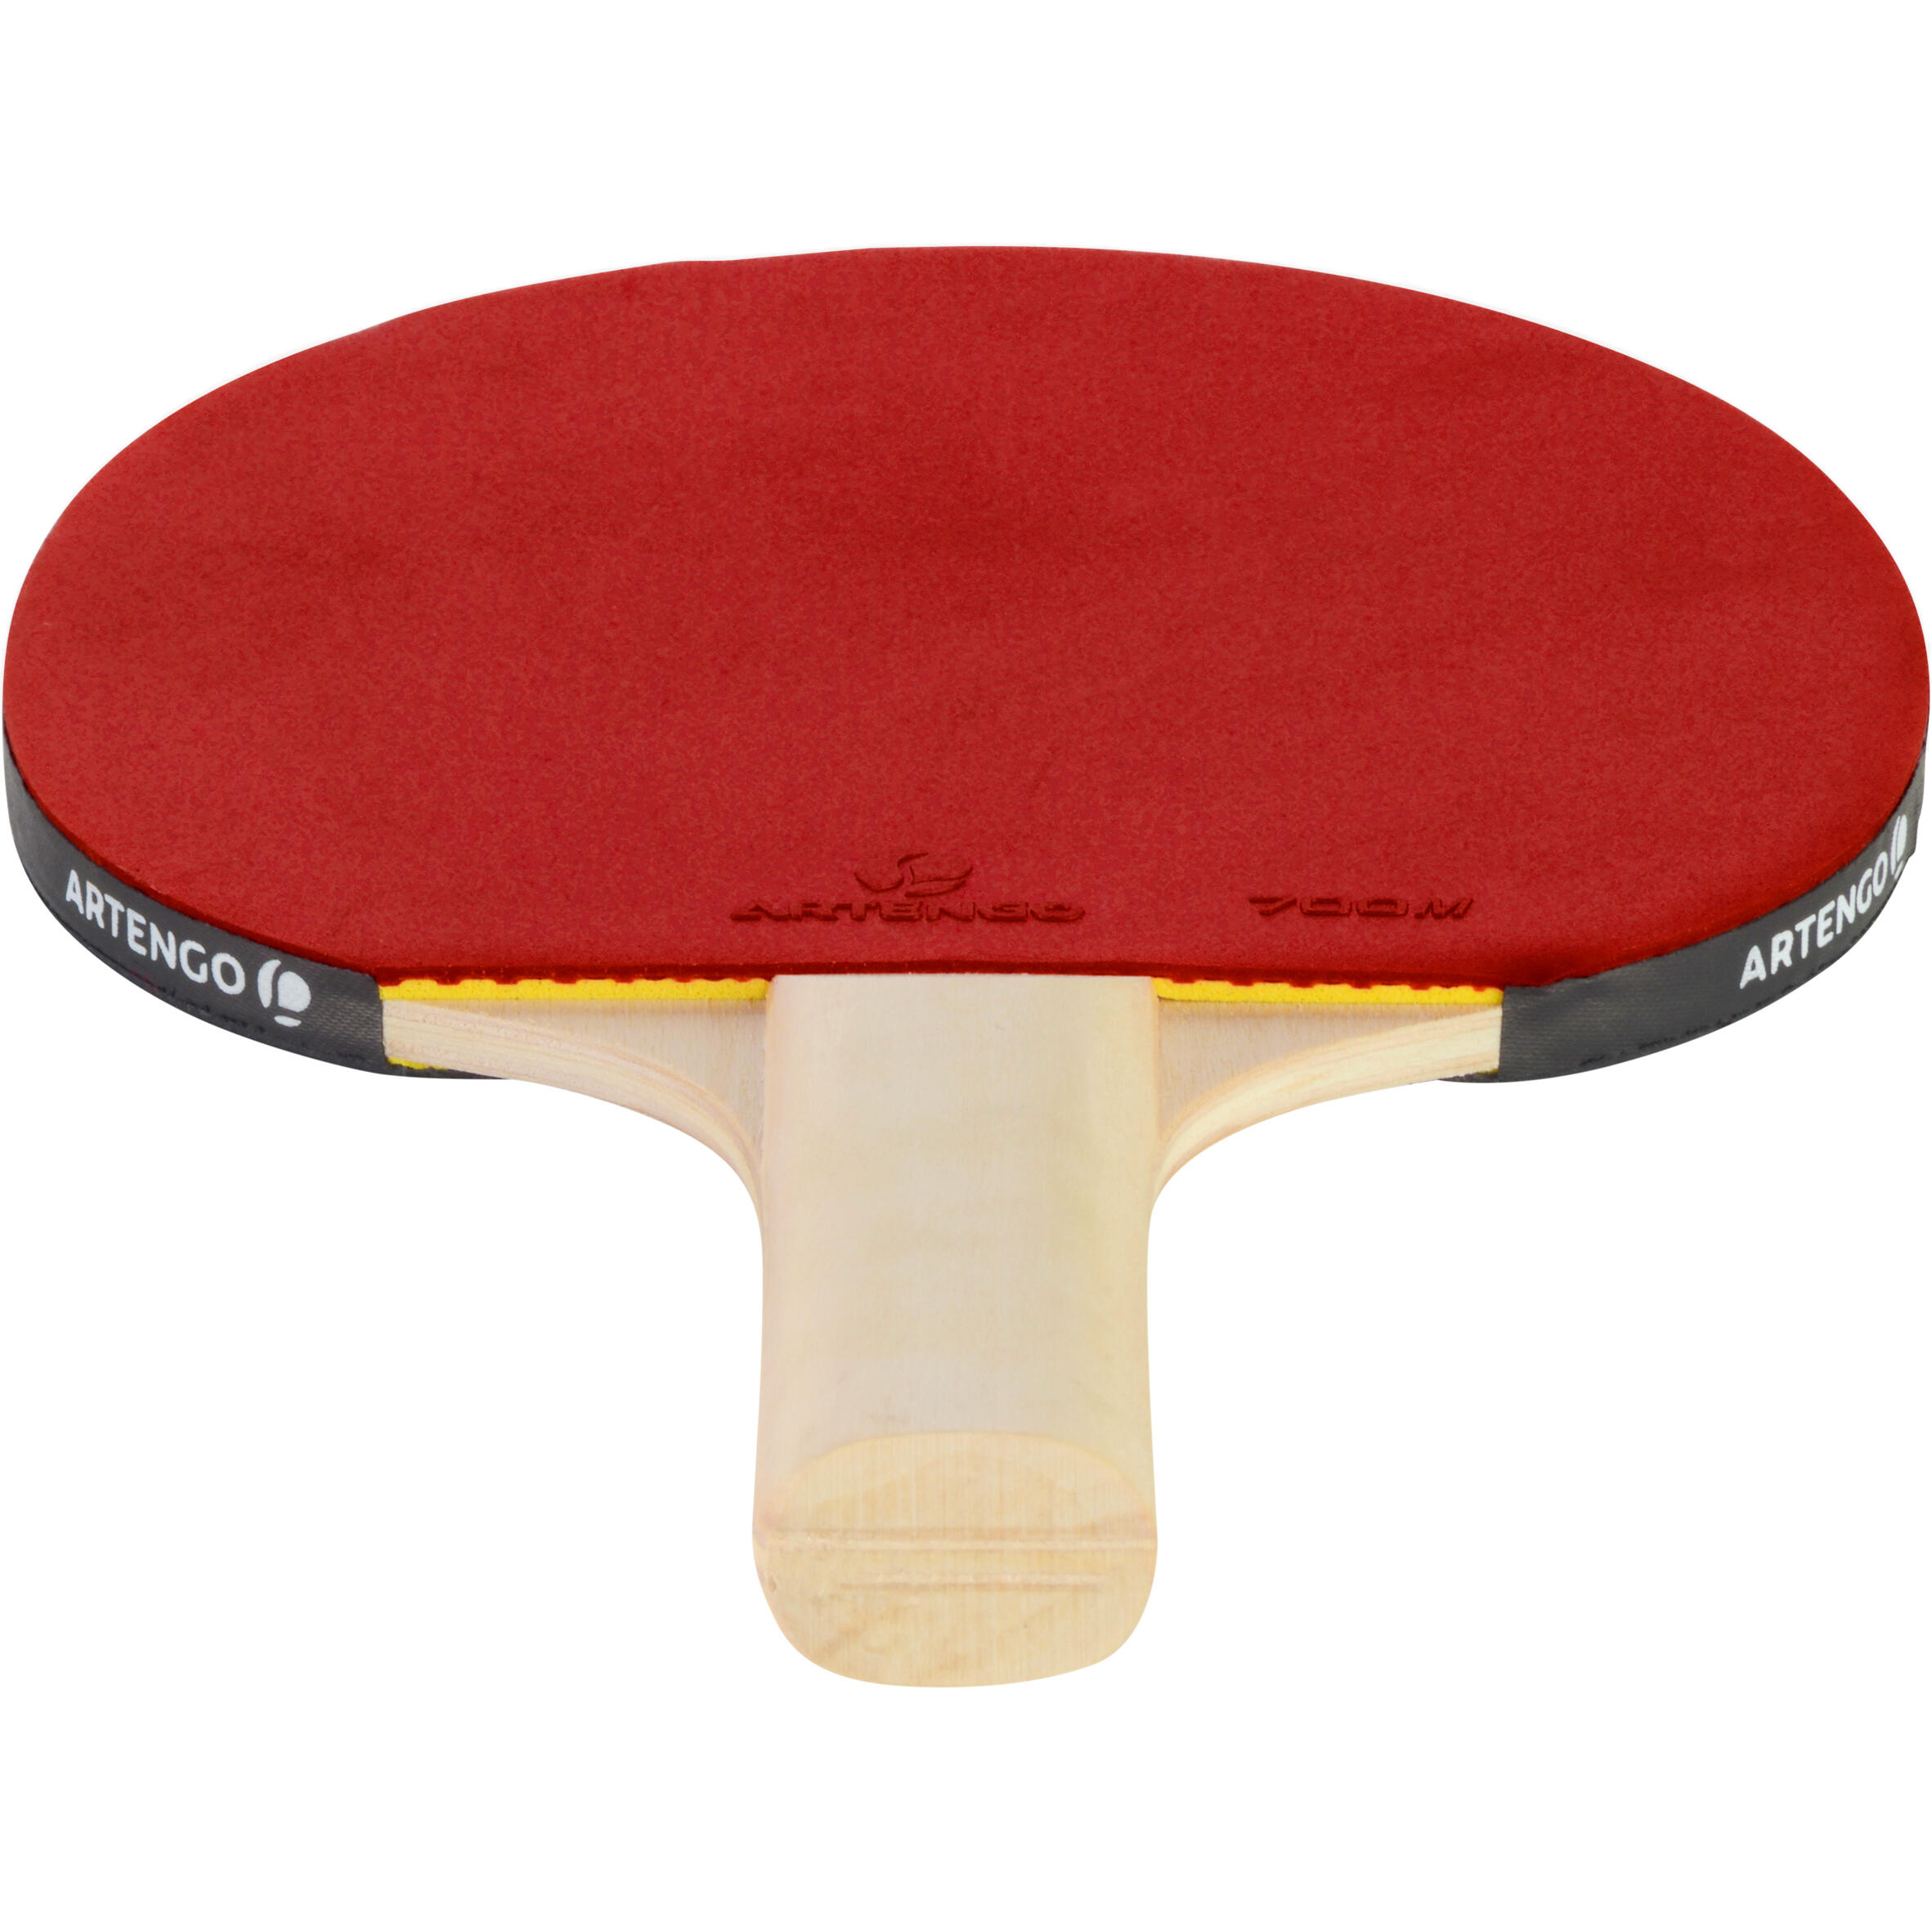 decathlon table tennis racket